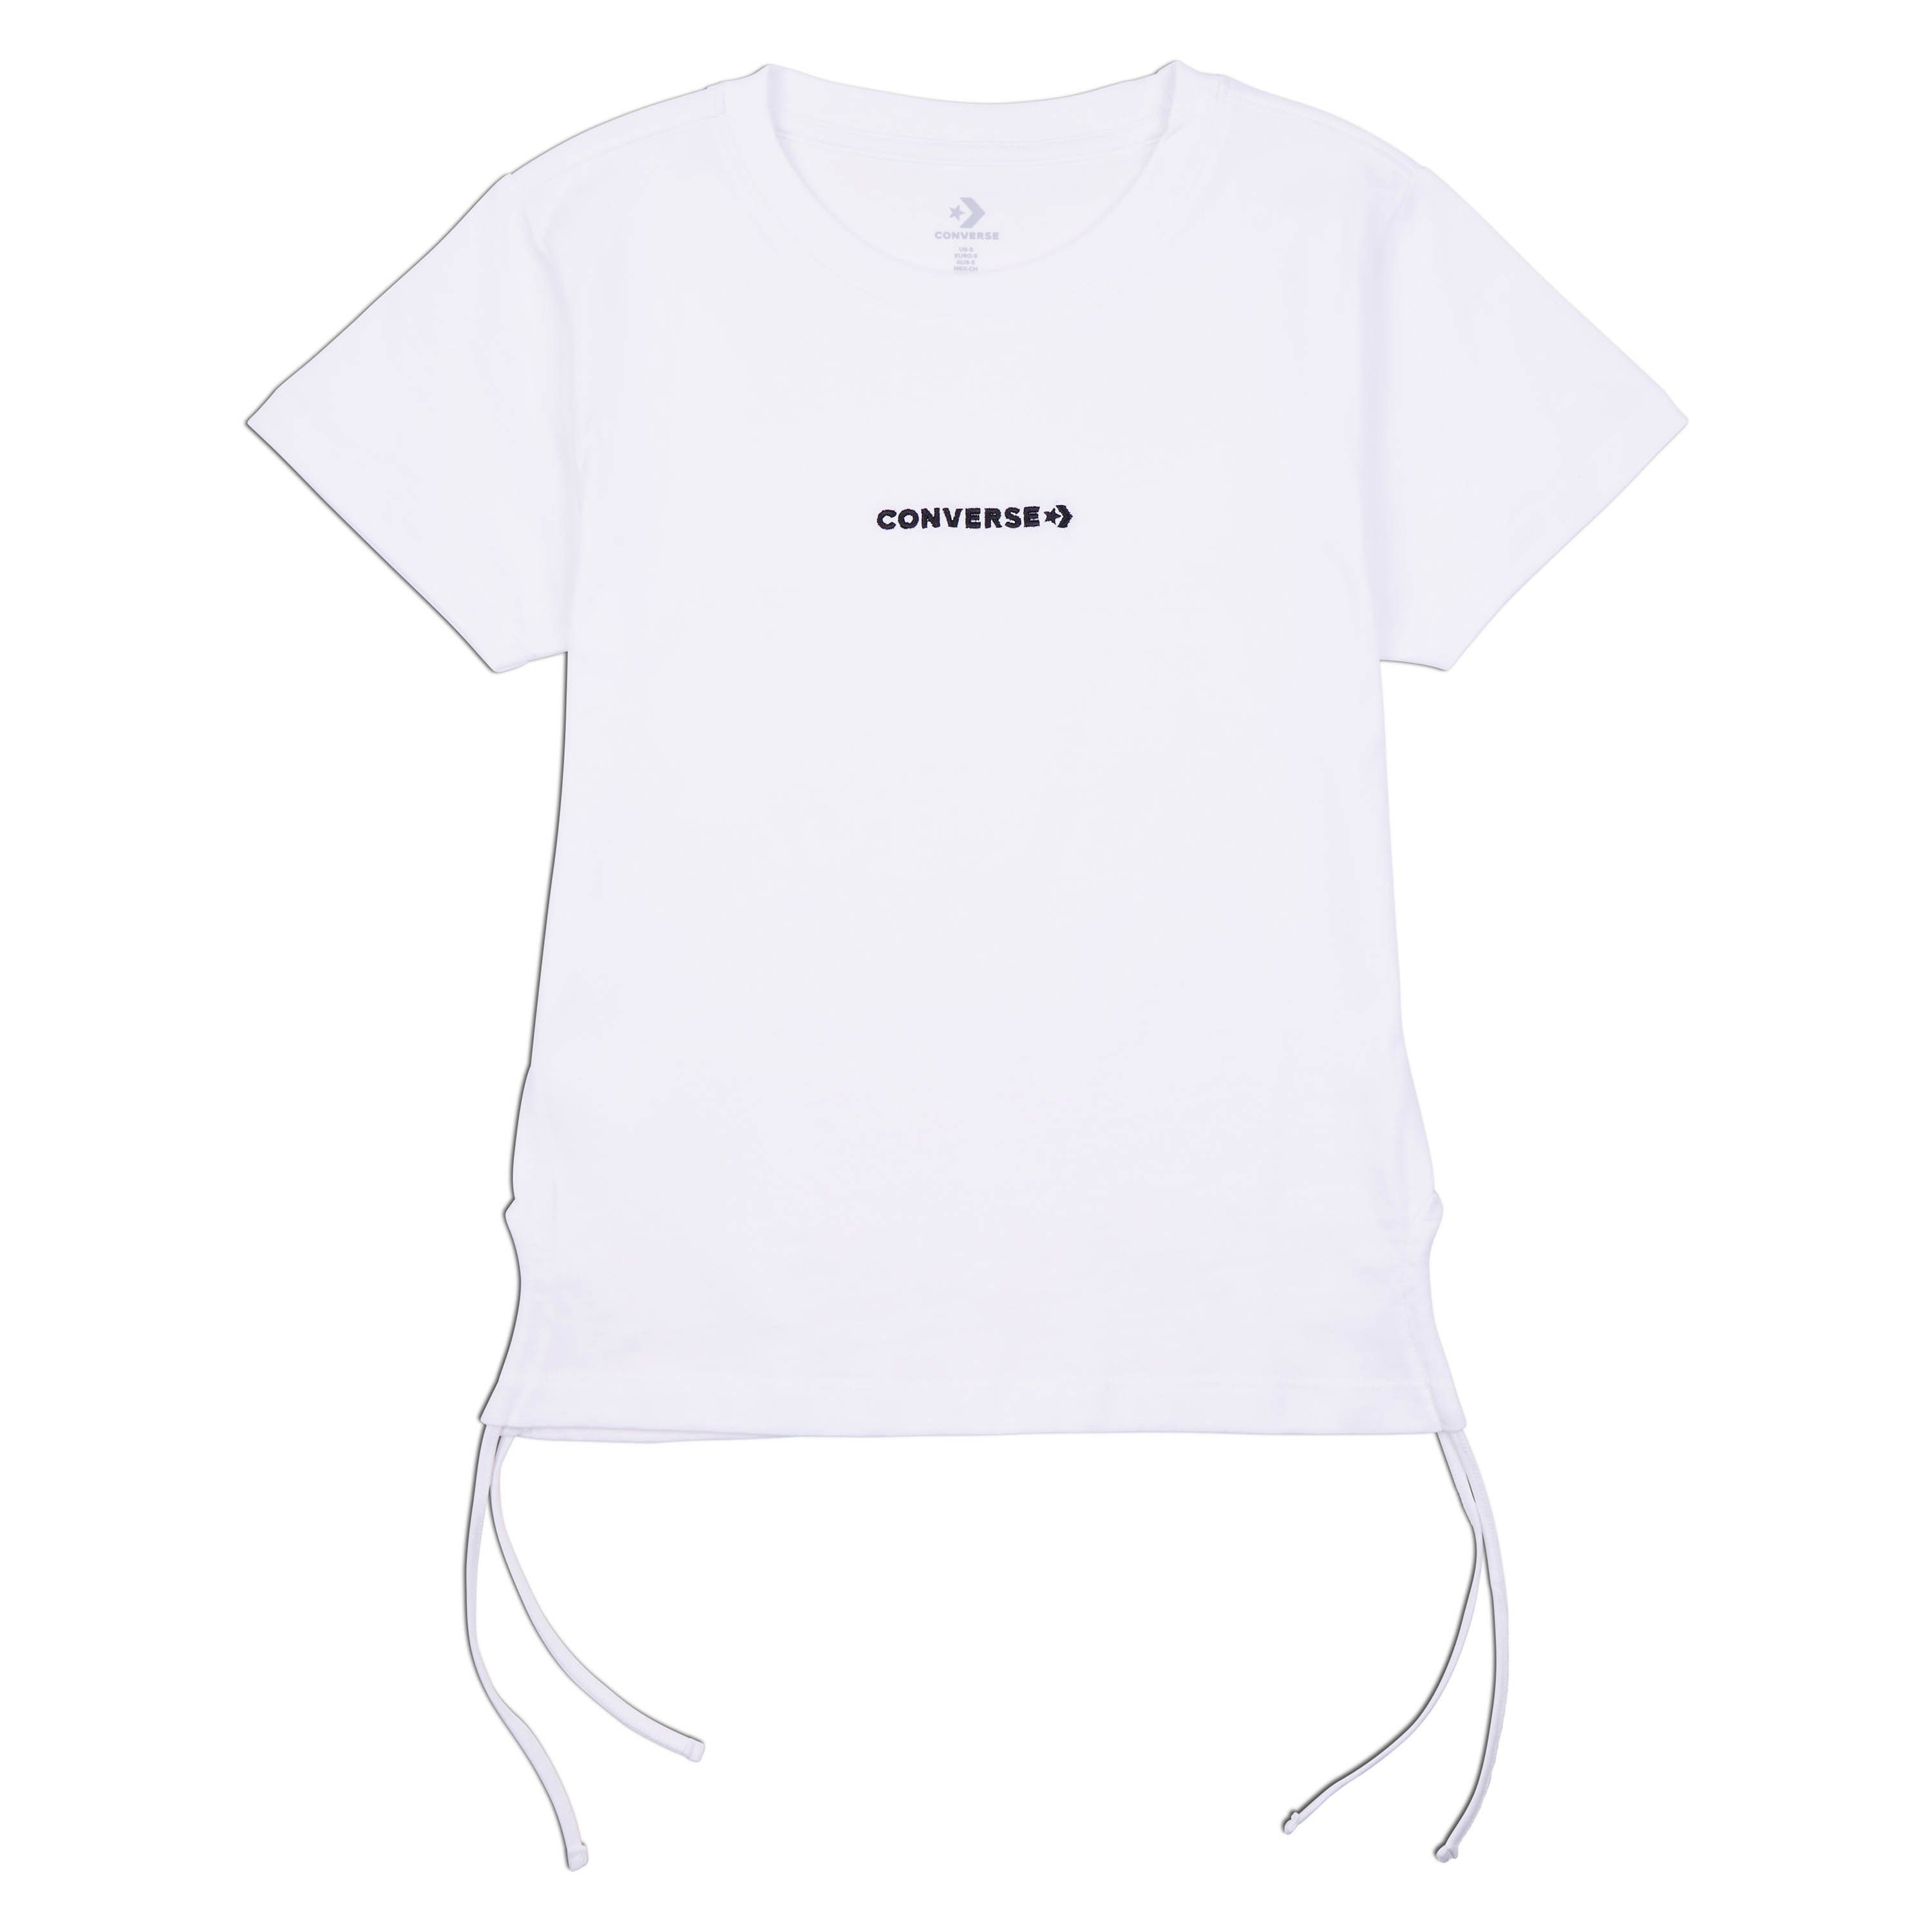 weiß WORDMARK Converse NOVELTY FASHION T-Shirt TOP